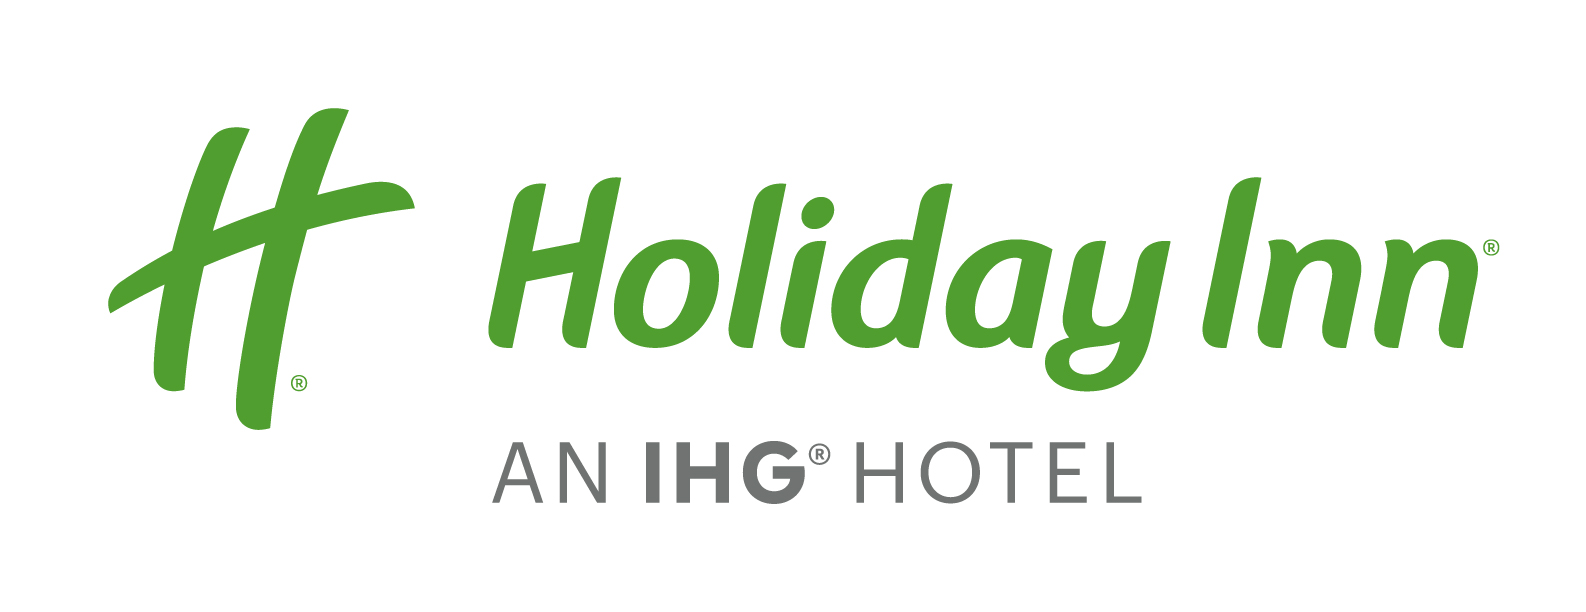 Holiday Inn logo 1[43829]